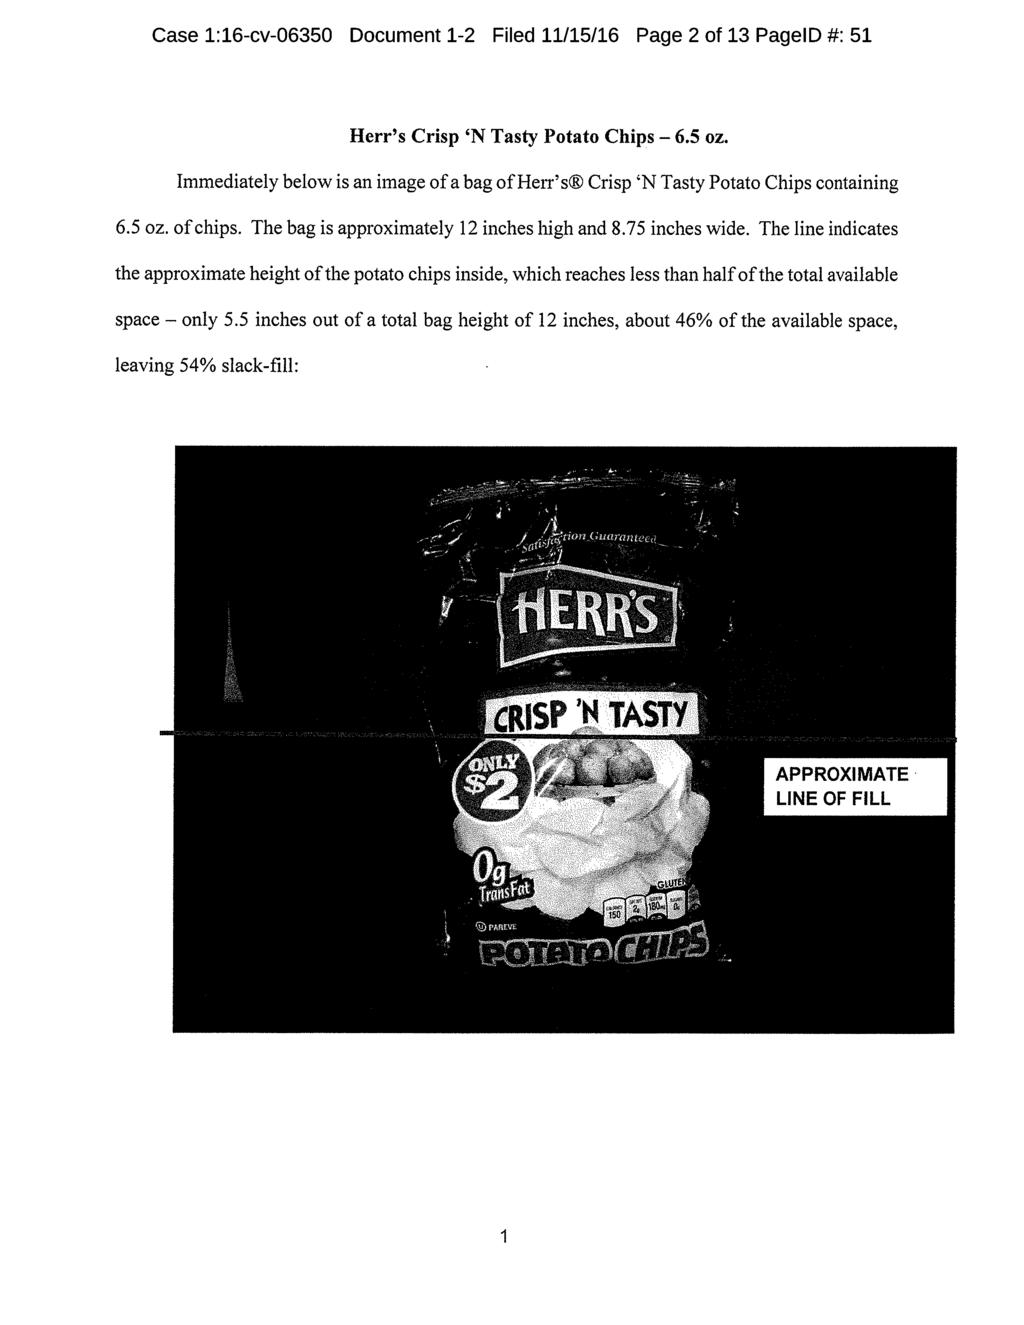 Case 1:16-cv-06350 Document 1-2 Filed 11/15/16 Page 2 of 13 PagelD 51 Herr's Crisp 'N Tasty Potato Chips 6.5 oz.